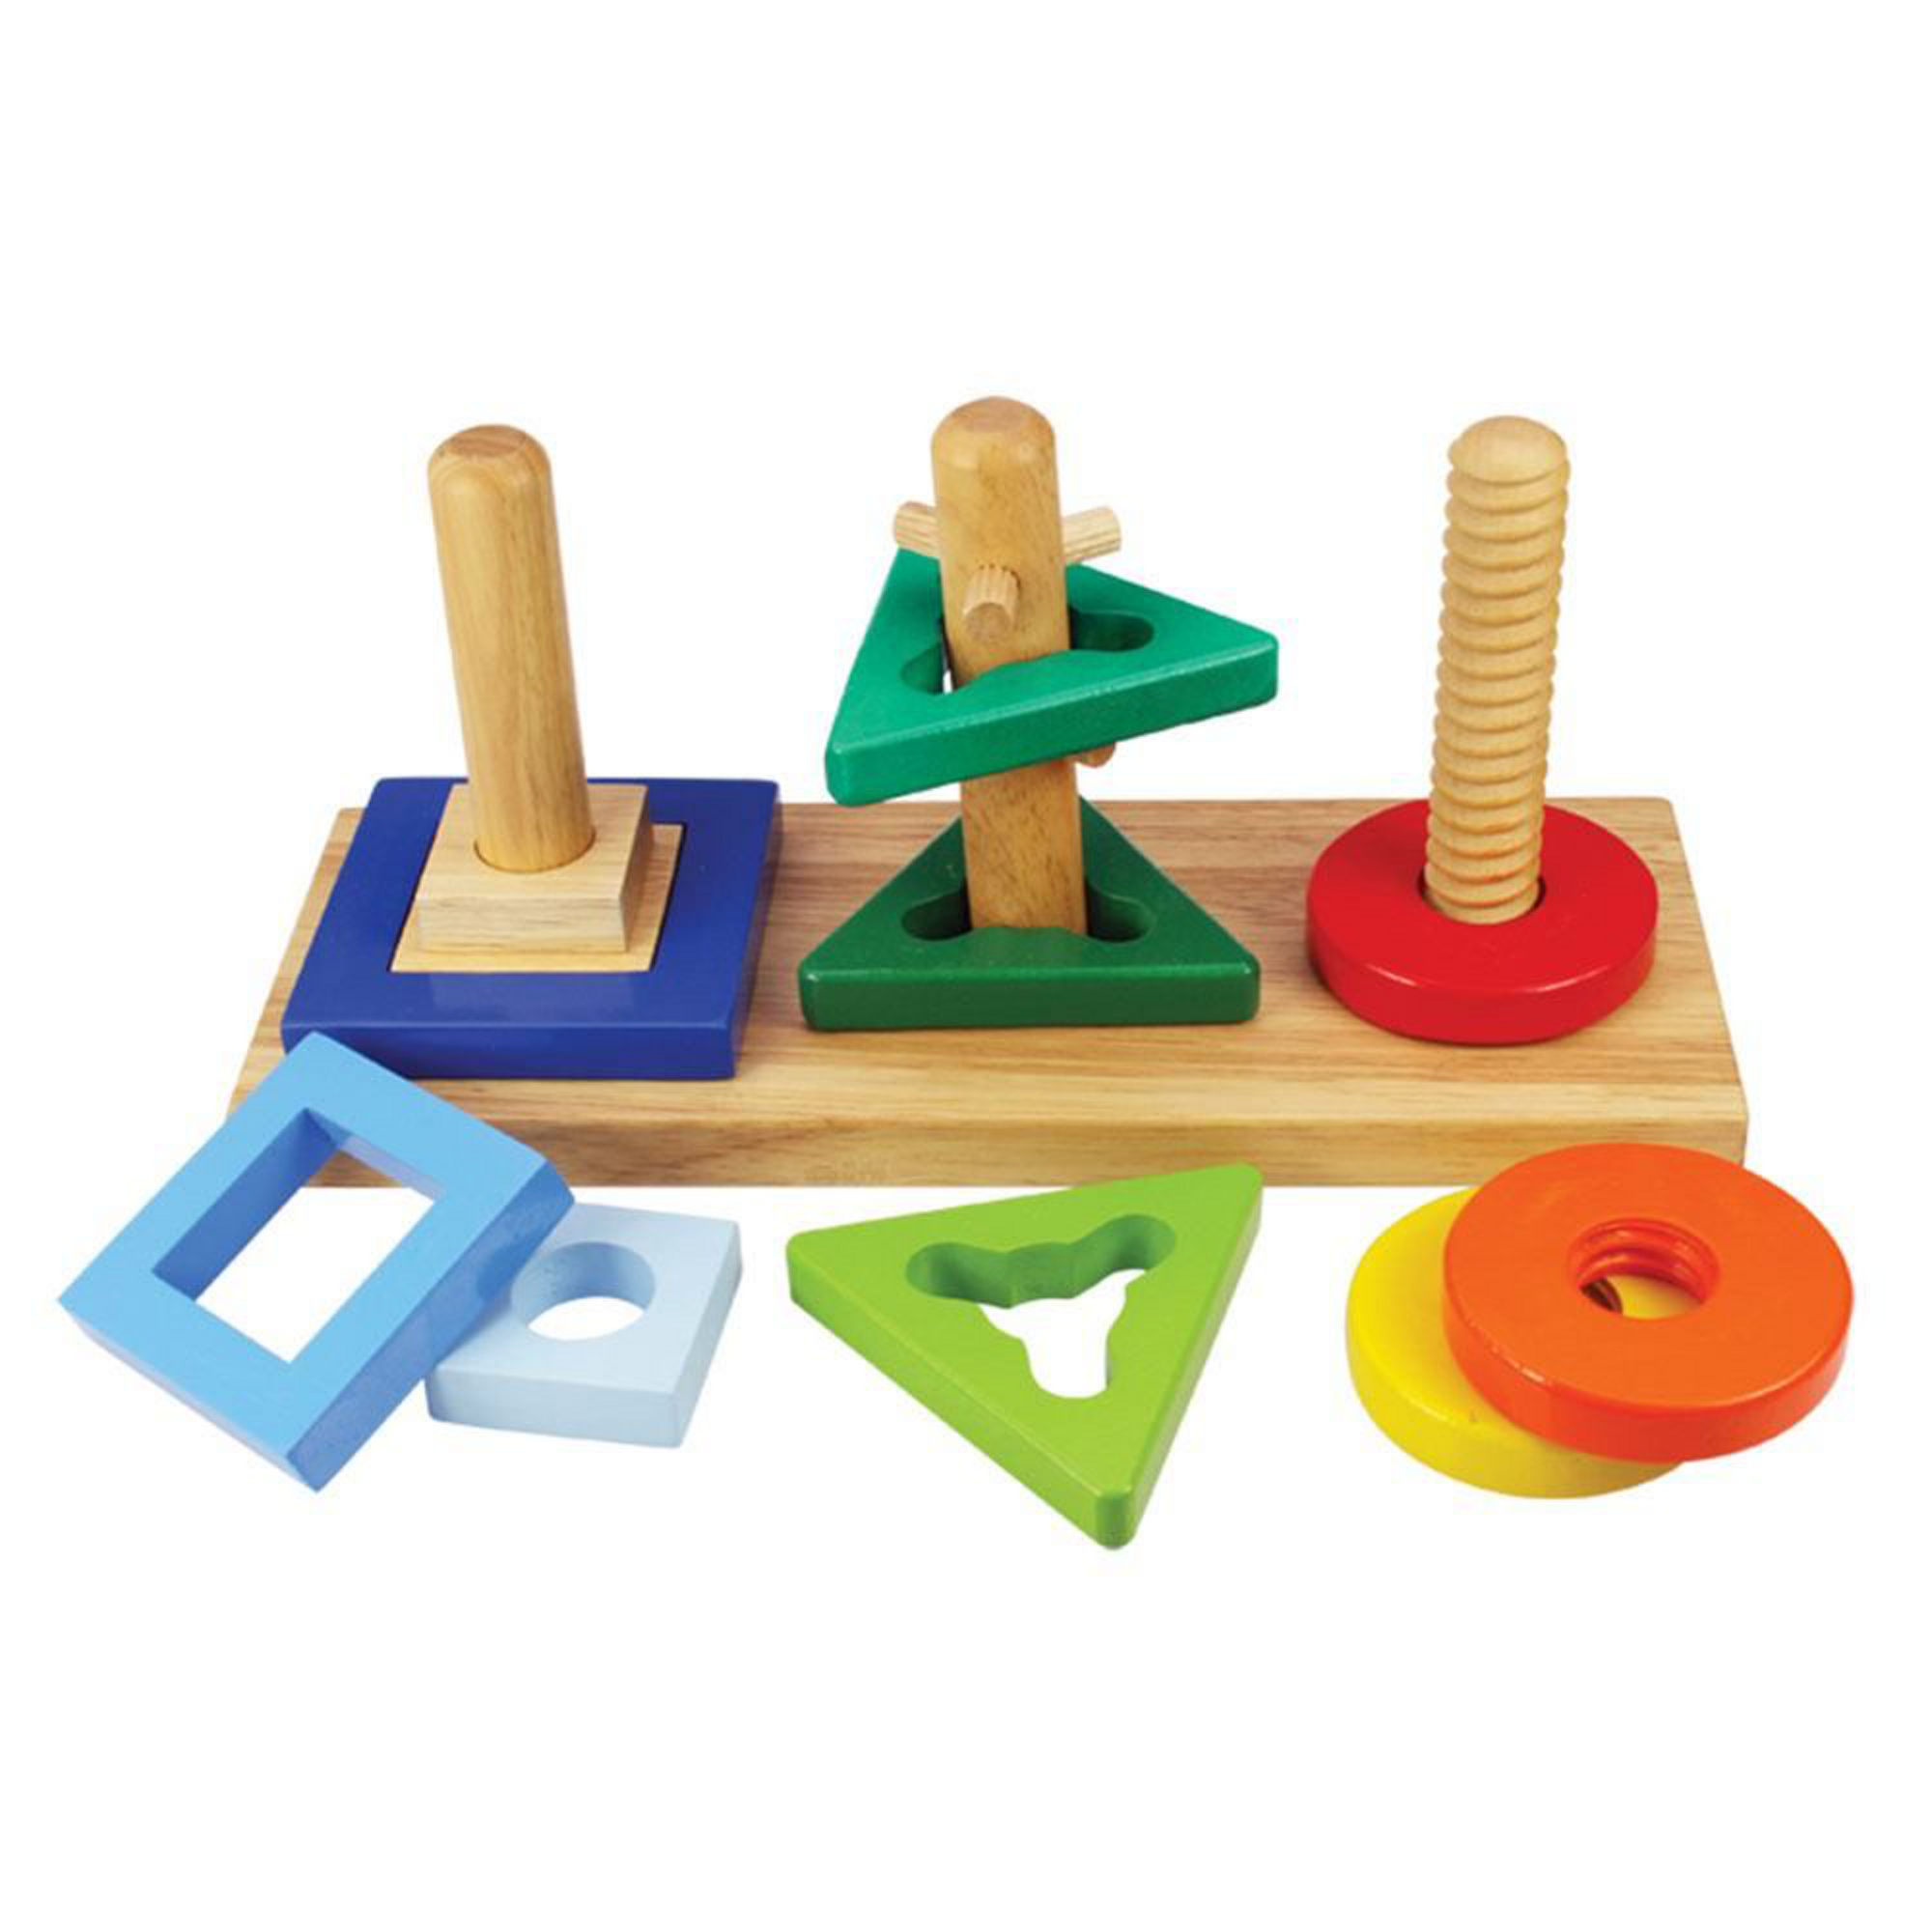 Screw puzzle wood. Развивающие игрушки из дерева. Игрушки из дерева для детей. Игрушки для мелкой моторики. Деревянные игрушки для детей развивающие.